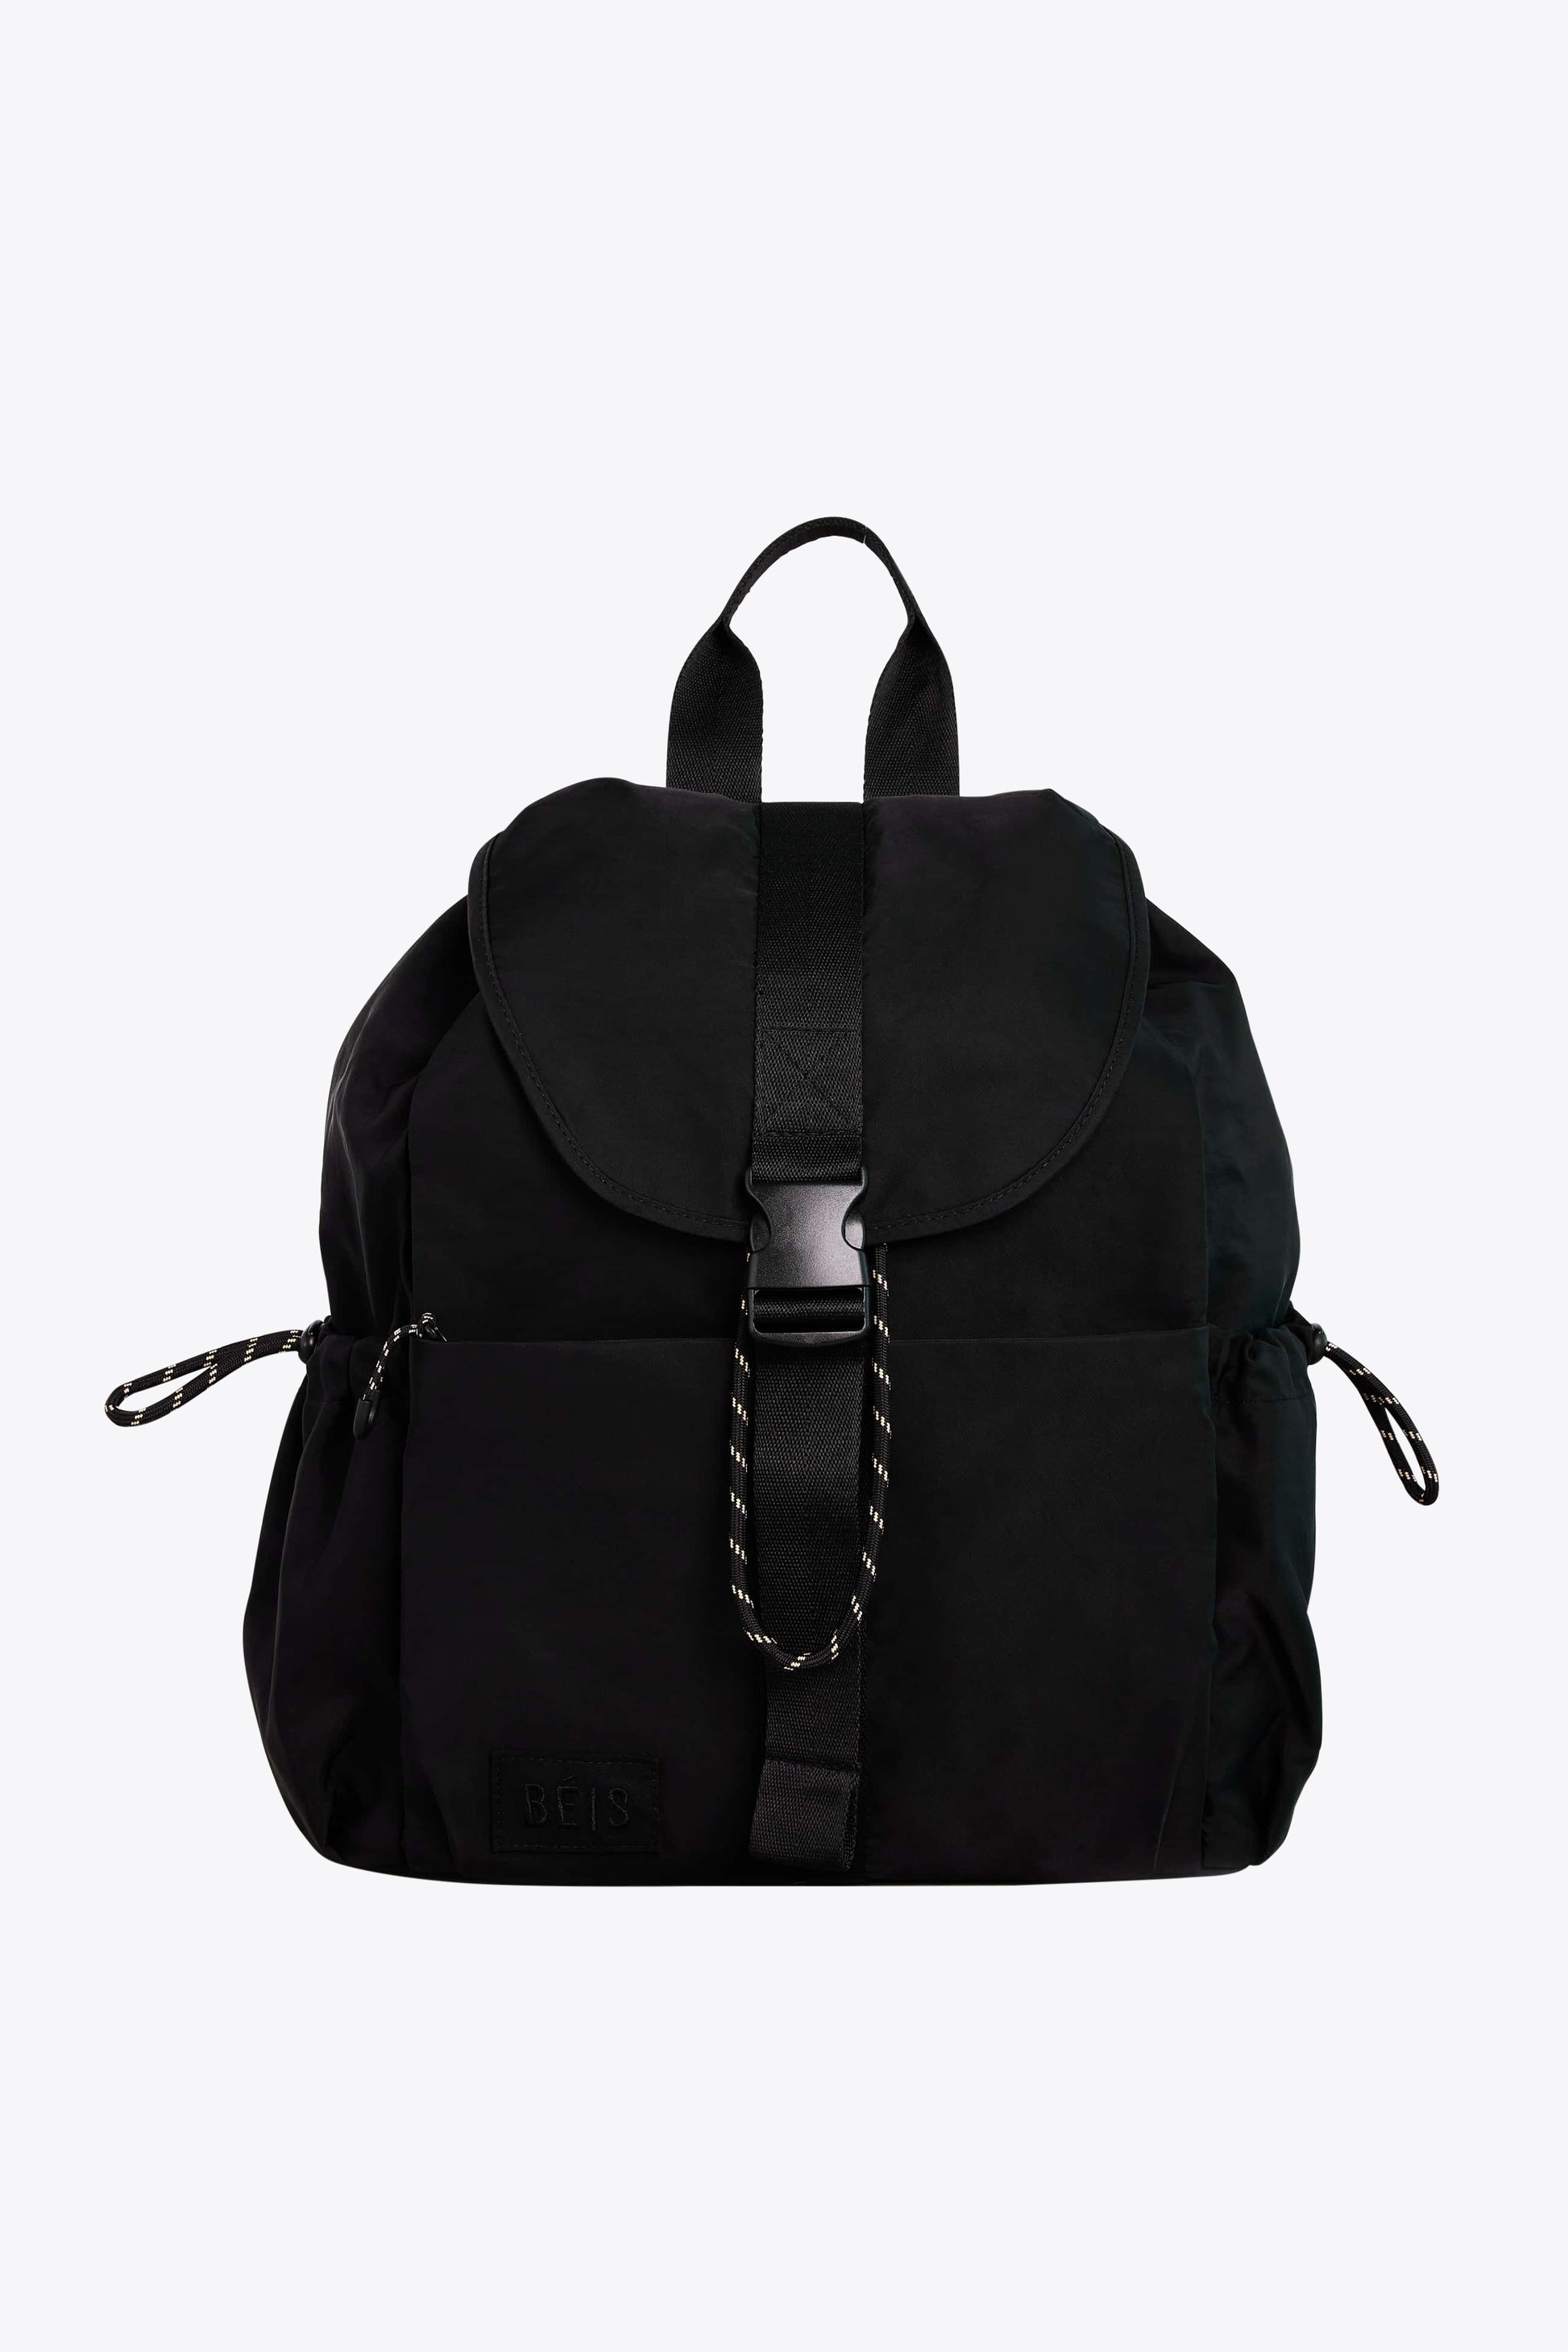 Gym Backpack For Women Men Waterproof Backpack With Shoe Compartment  Lightweight Travel Backpack Black Sports Backpack Large Gym Bag Beige 